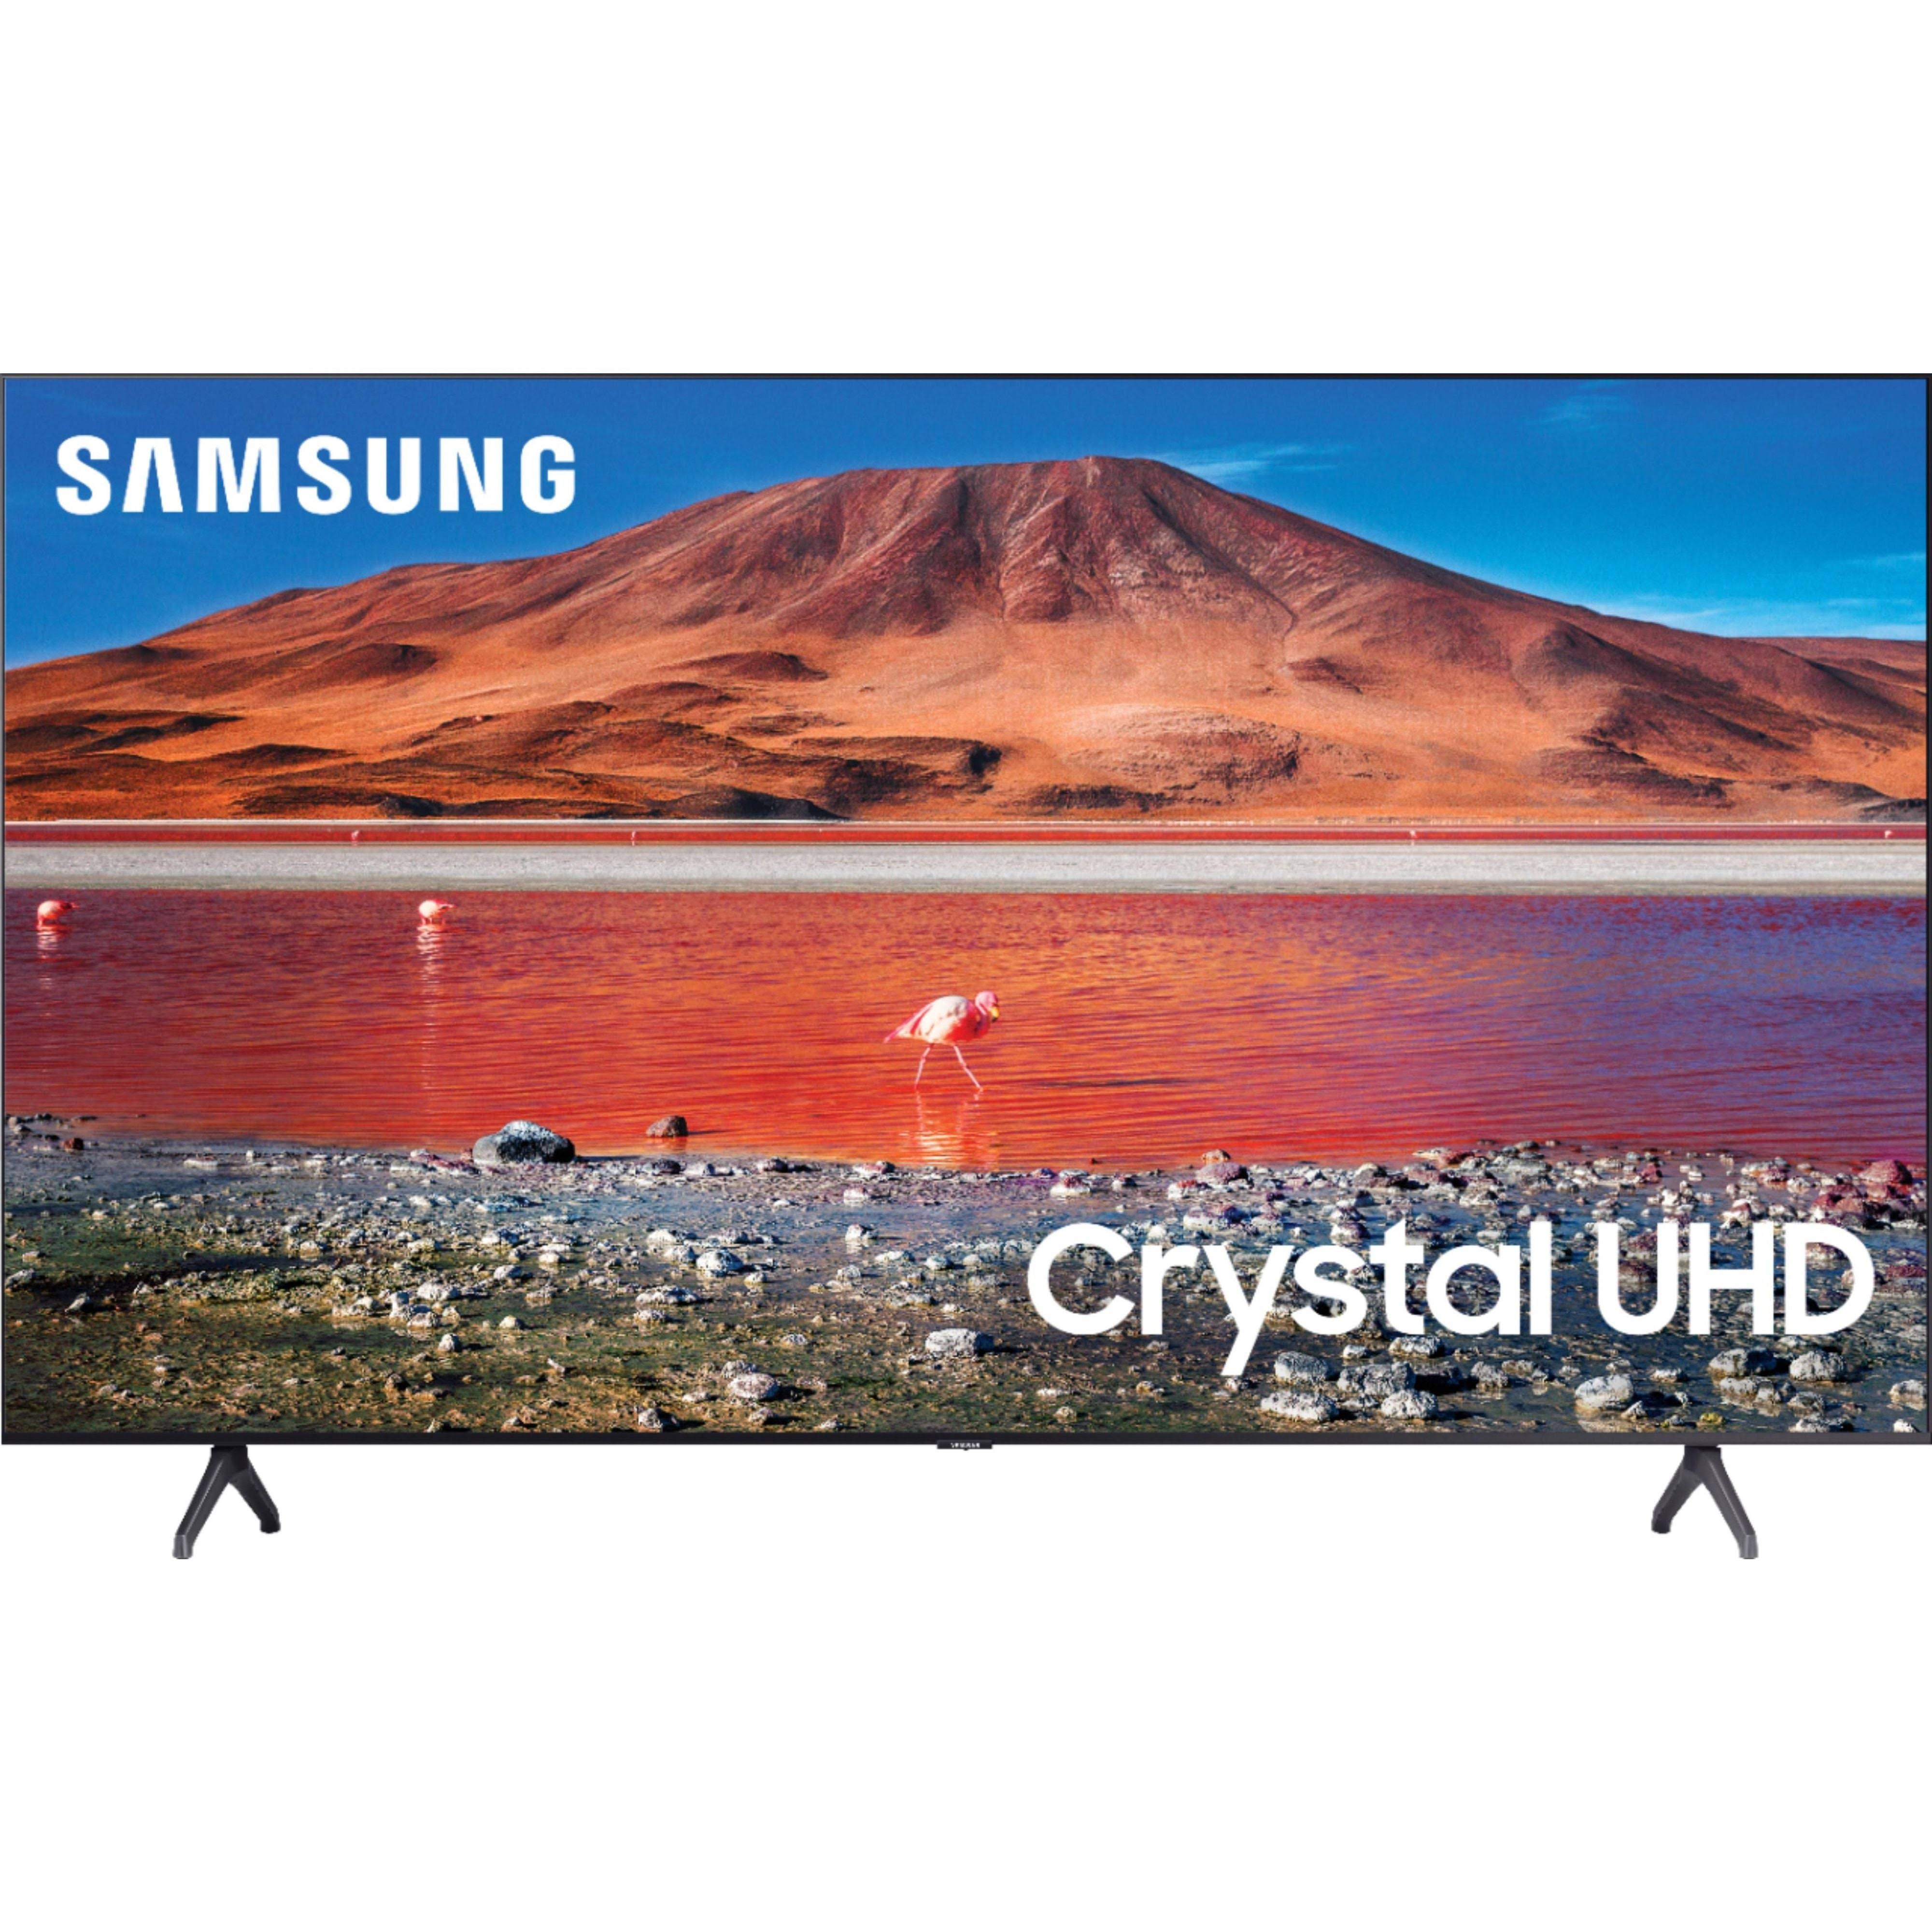 Samsung 50" Class 4K Crystal UHD (2160P) LED Smart TV with HDR UN50TU7000